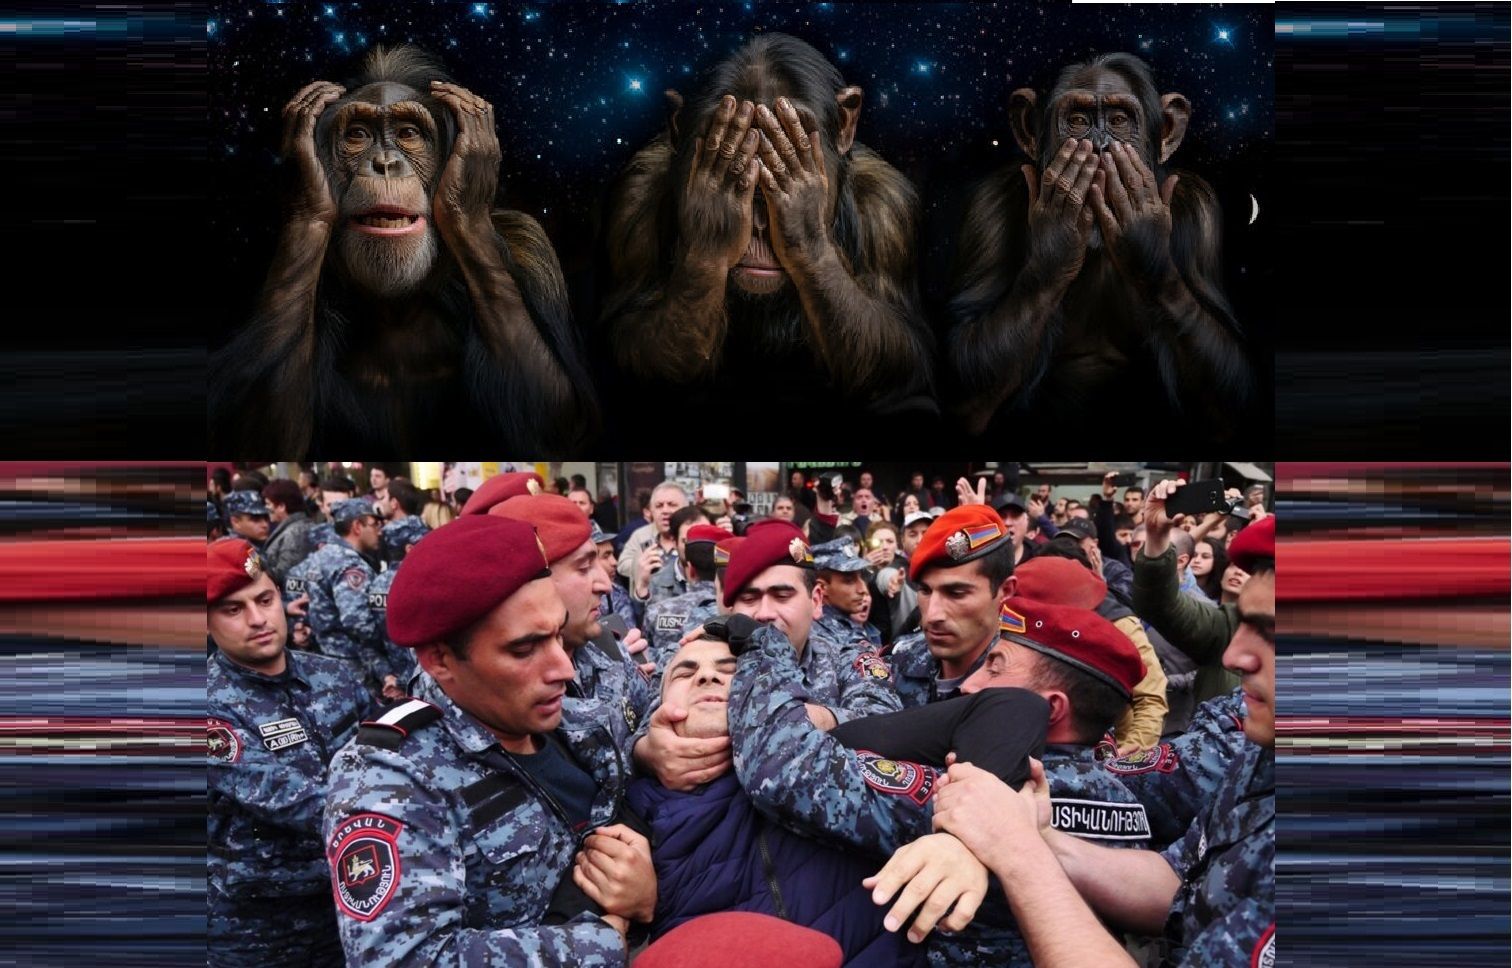 Armenian “democracy” under police baton: Western Institutions’ three monkeys game